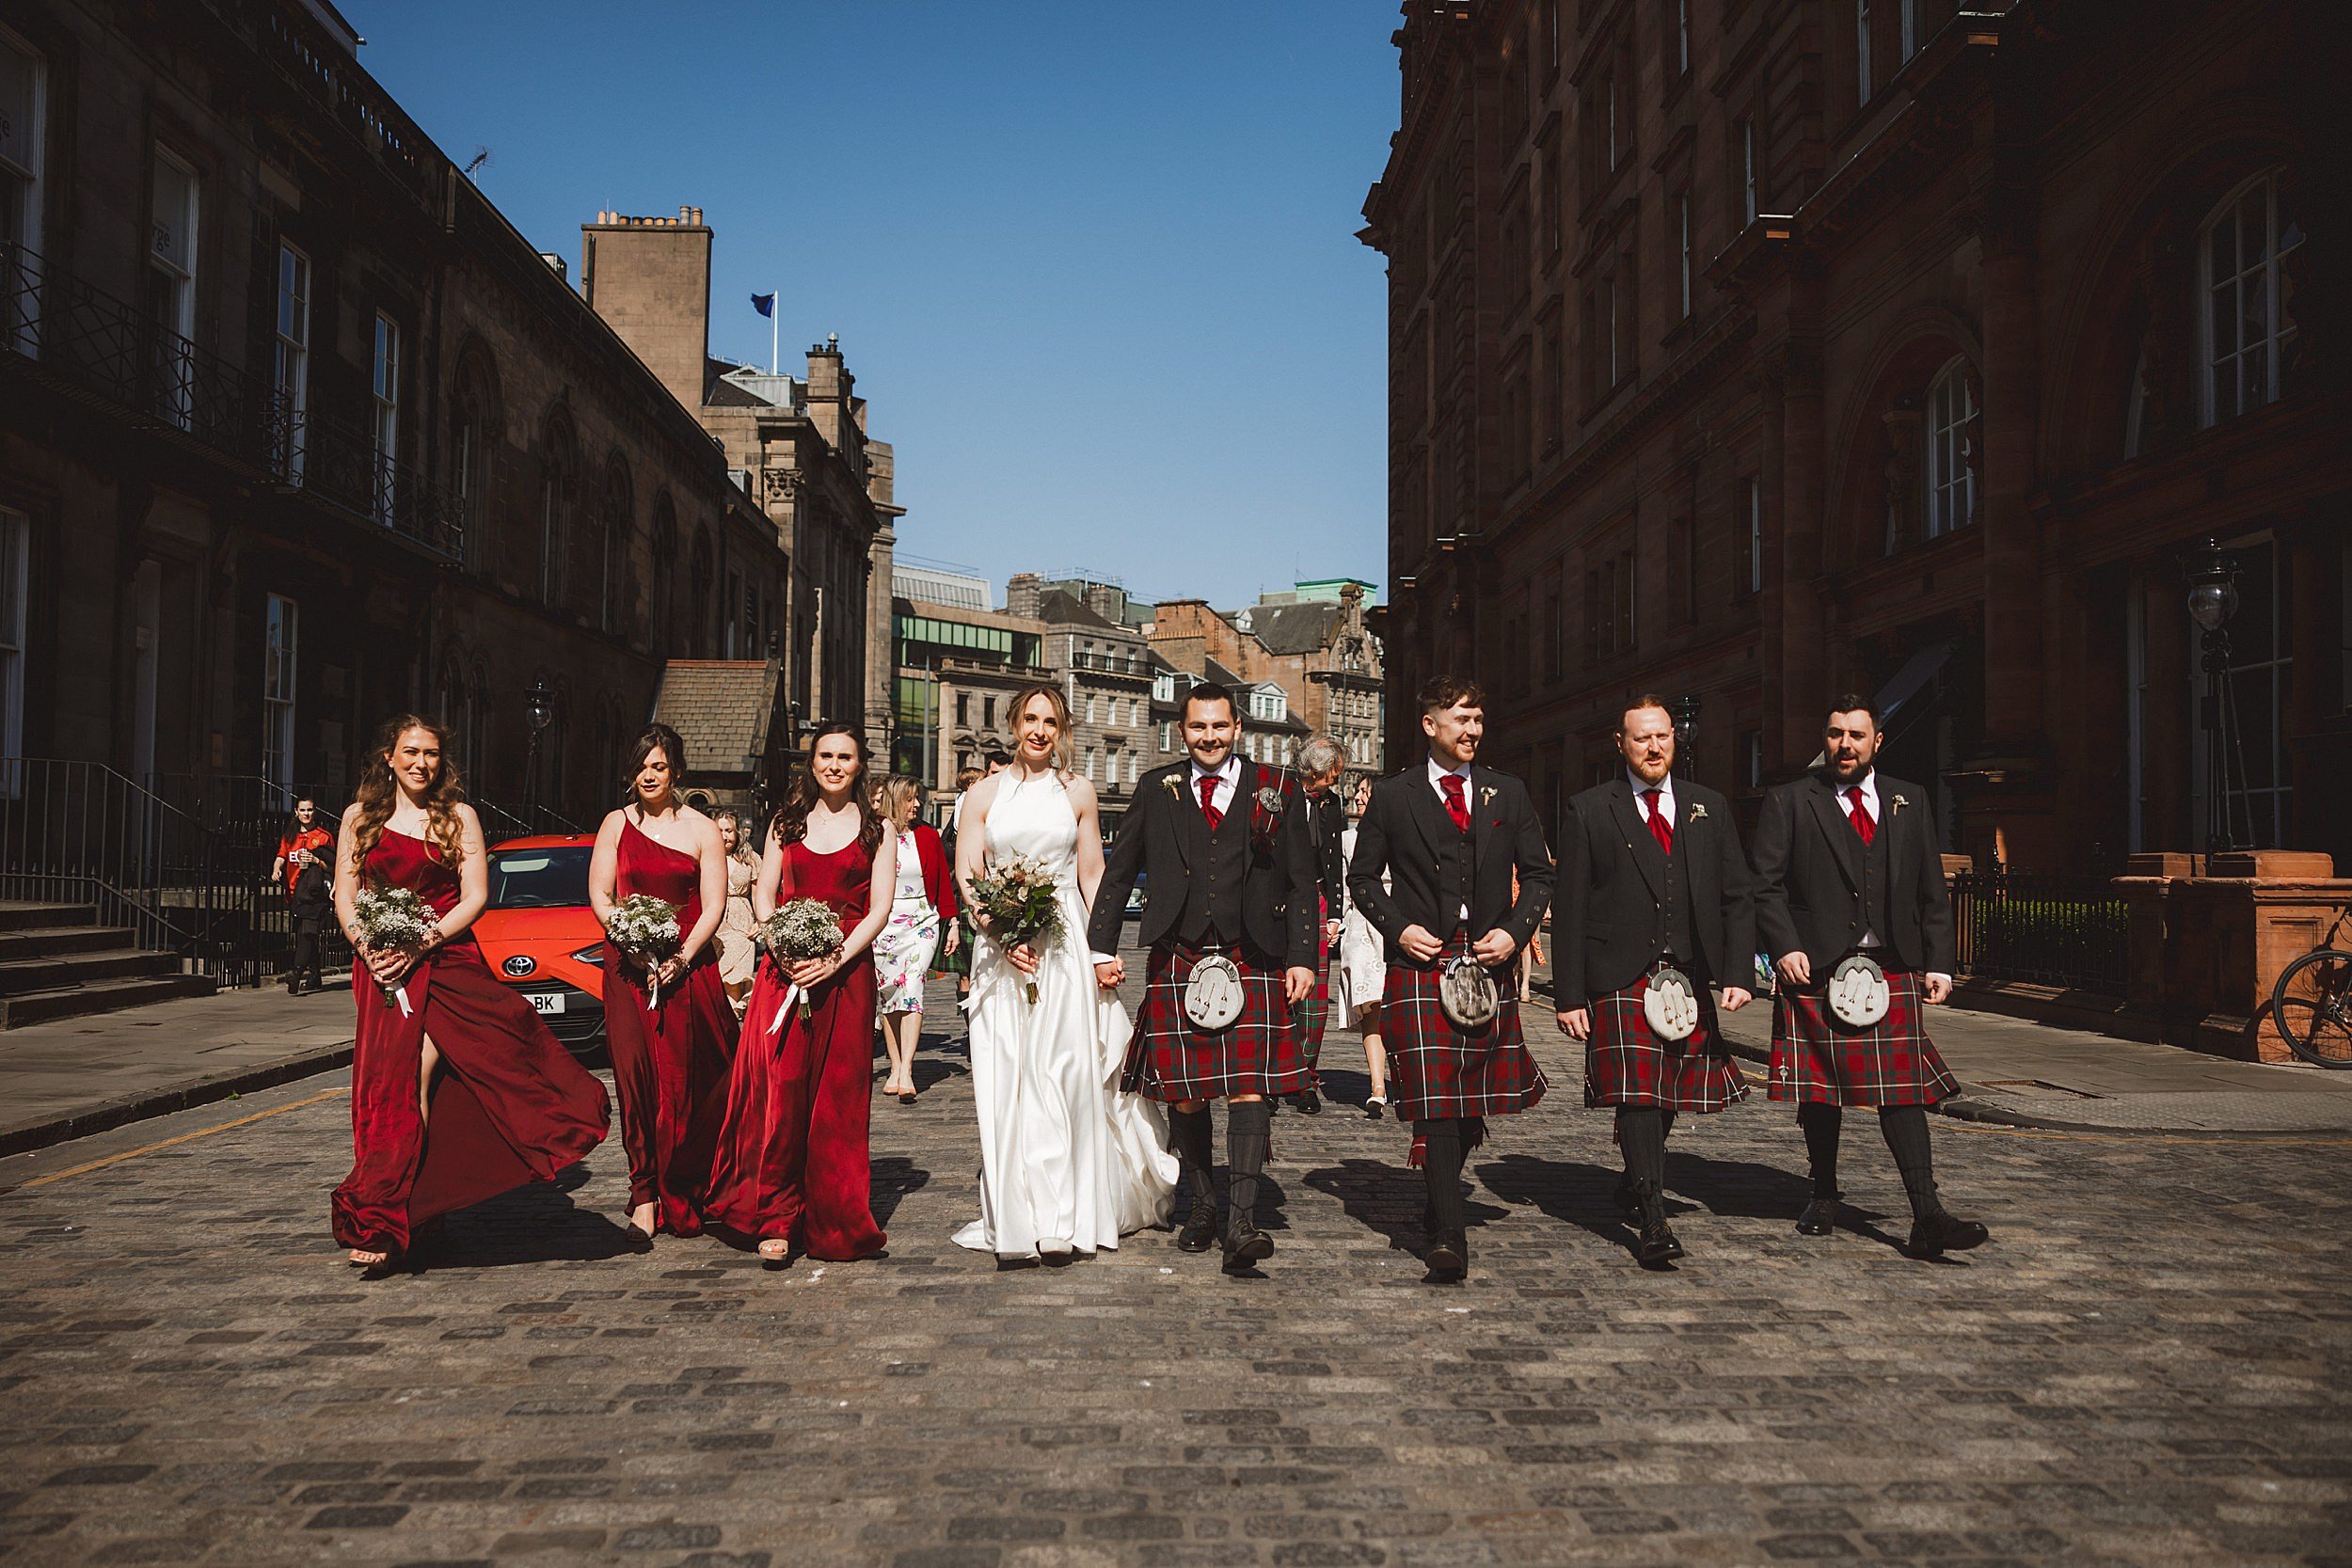 editorial shot of the wedding party walking along a street in edinburgh scotland by documentary wedding photographer edinburgh